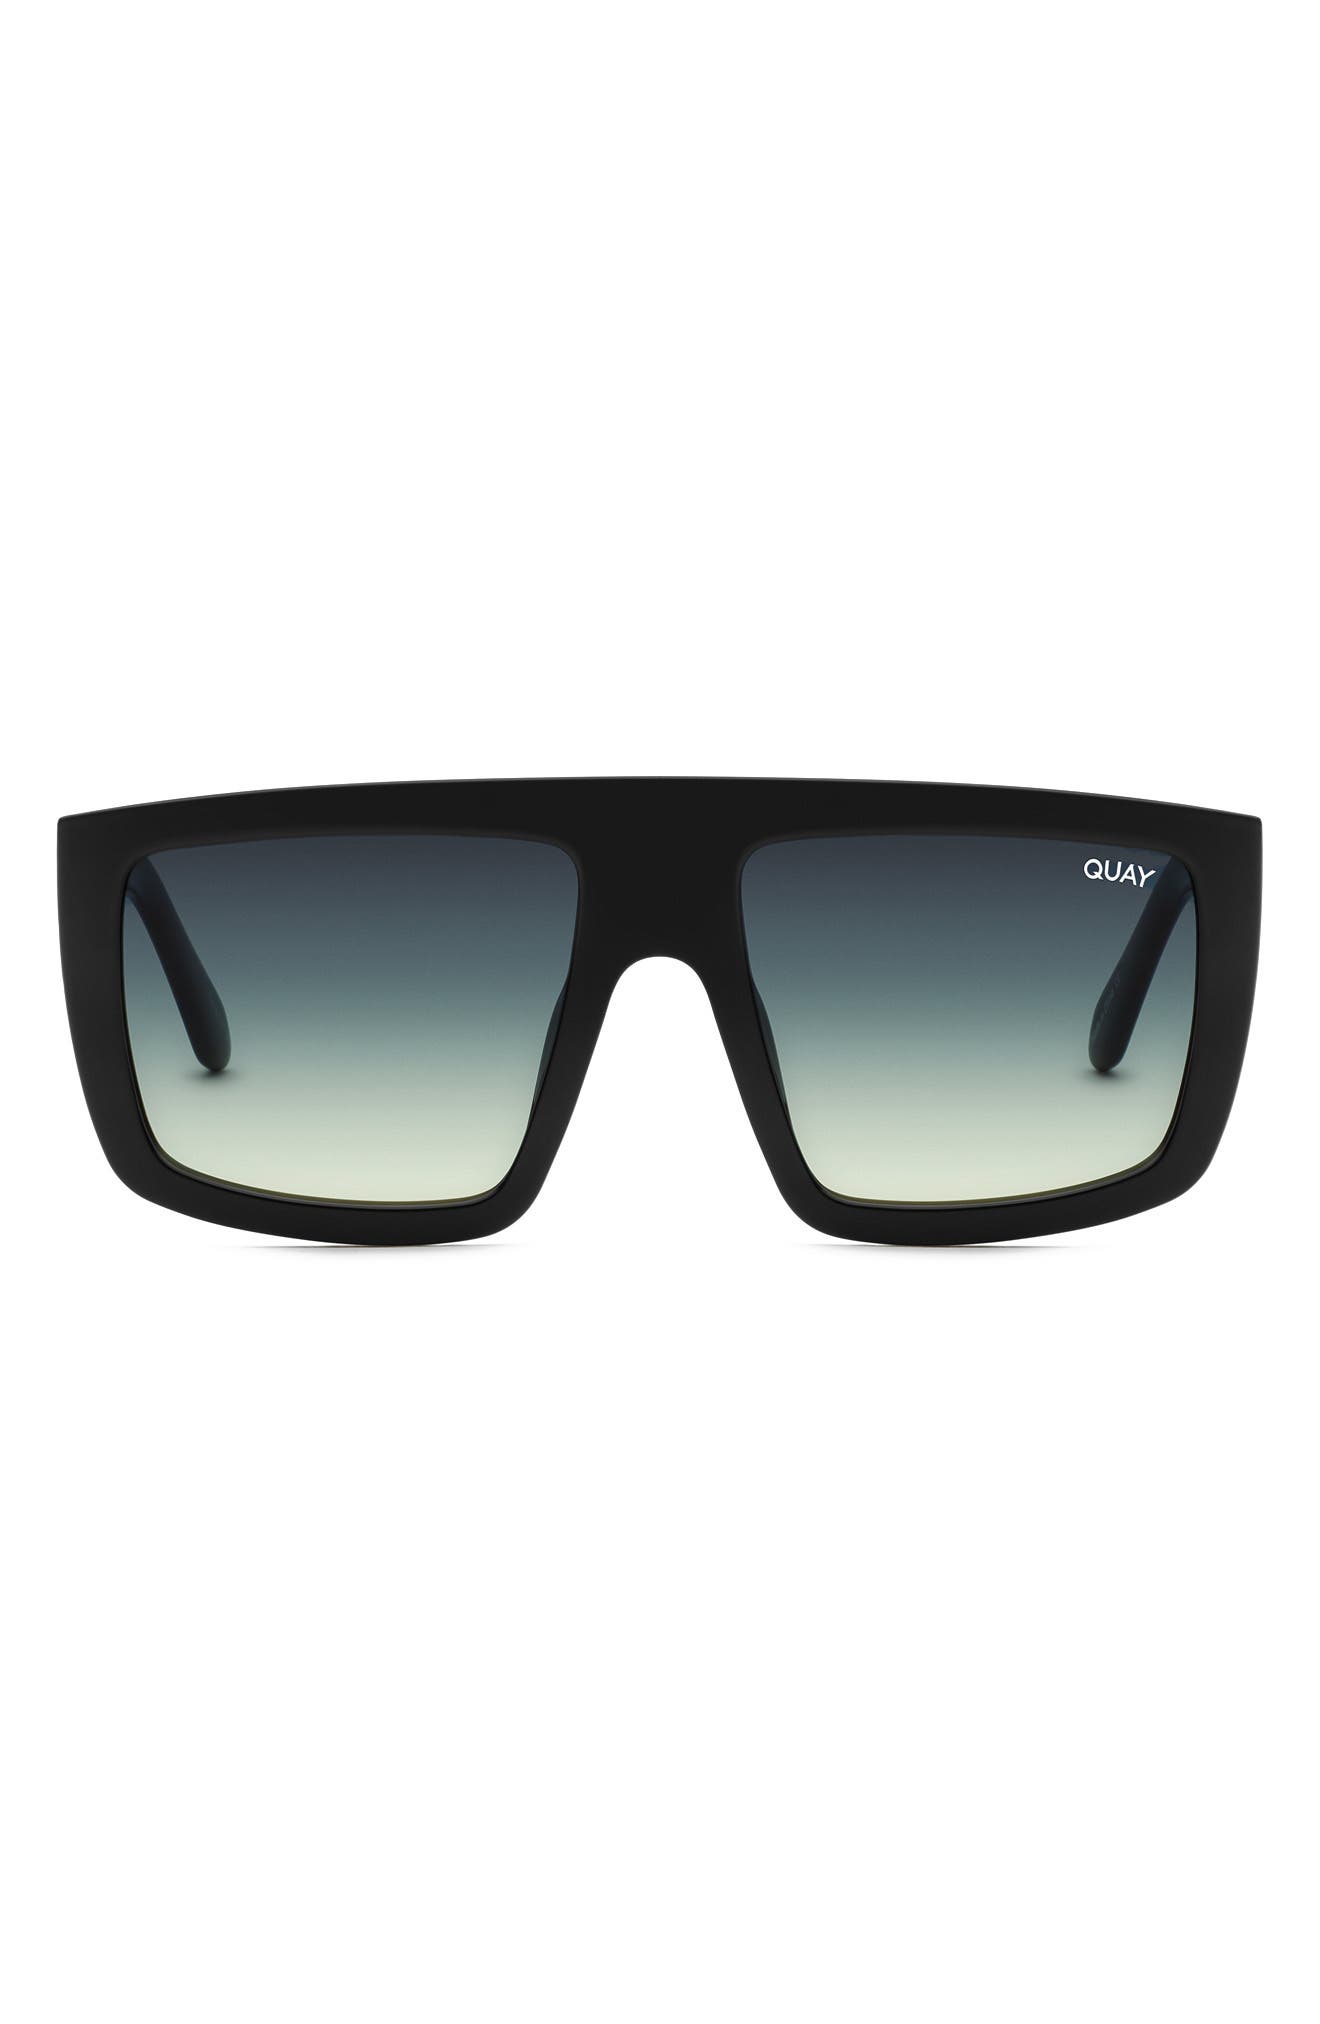 Large Big Dark Lens Square FLAT Zz TOP BarNun Designer Oversized Sunglasses L 